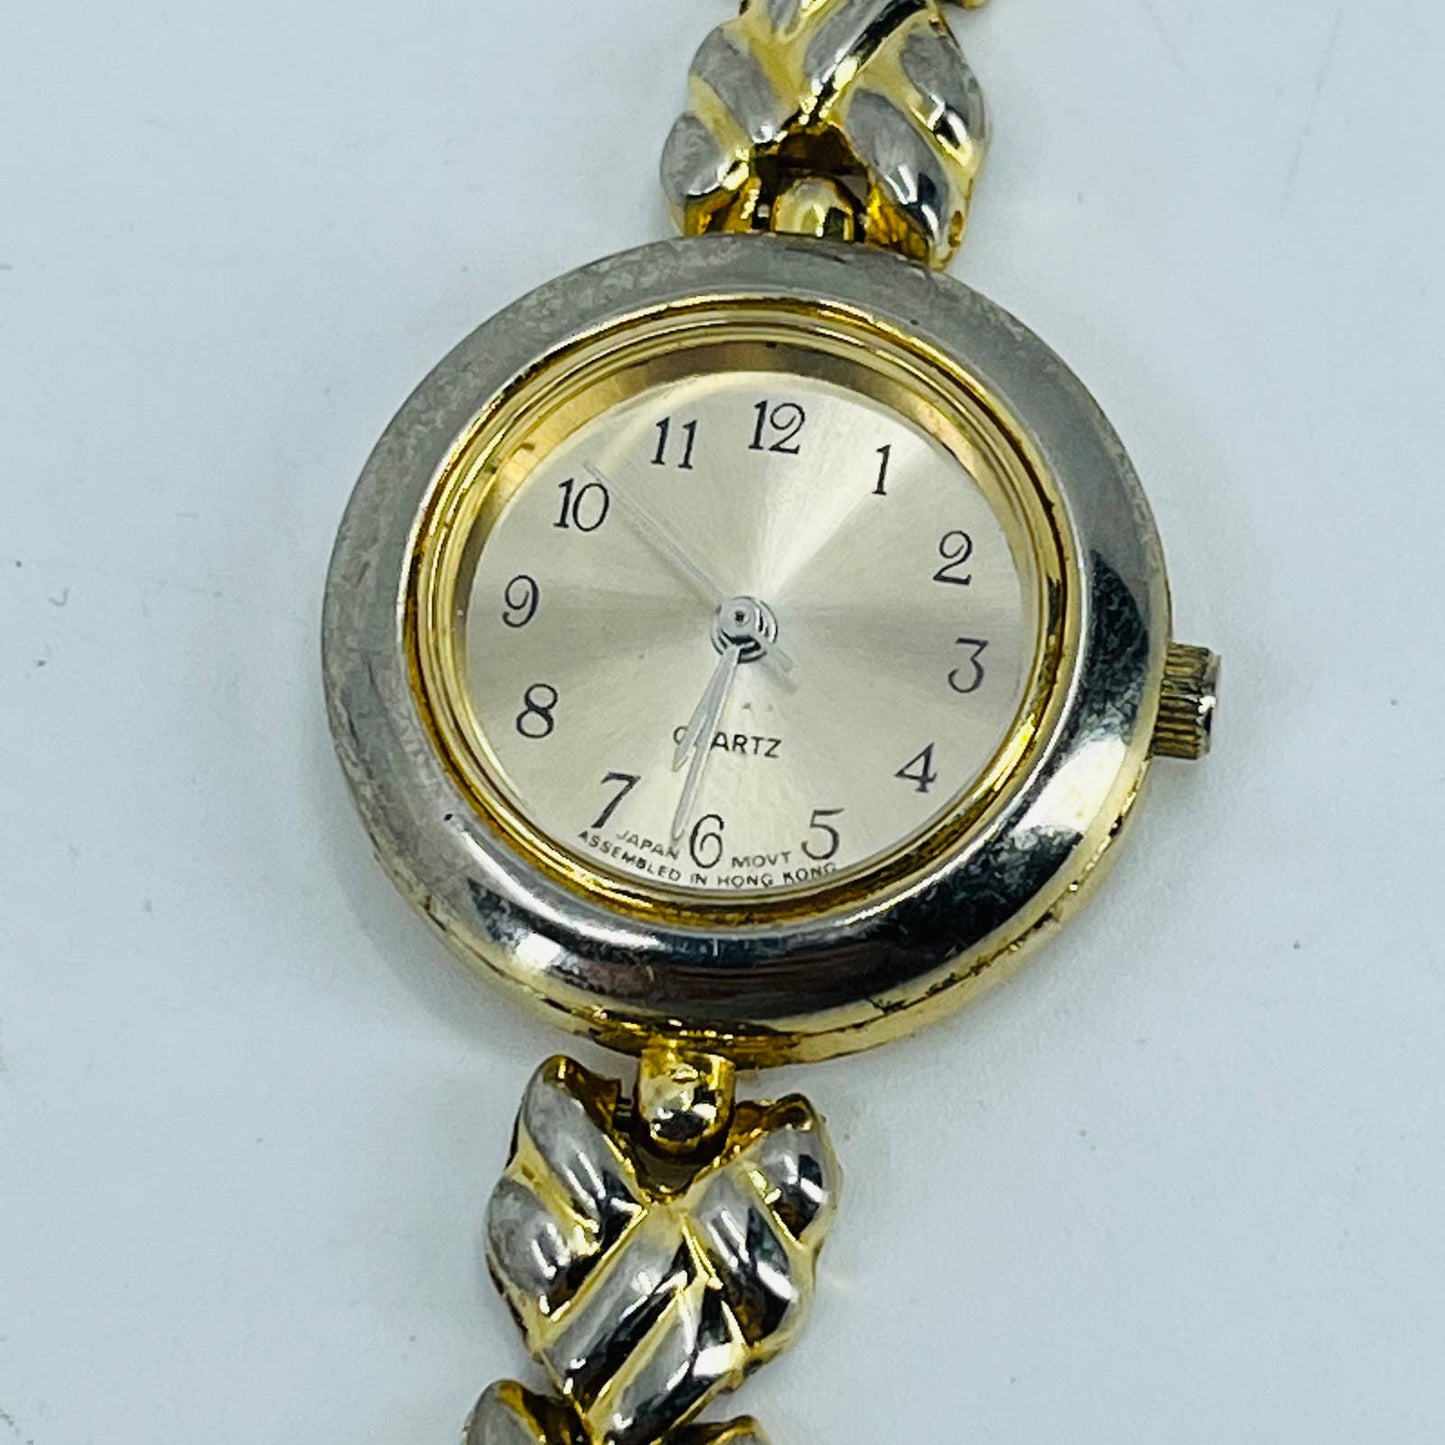 Vintage Gold & Silver Tone Quartz Watch Metal Bracelet Clasp Band SA9